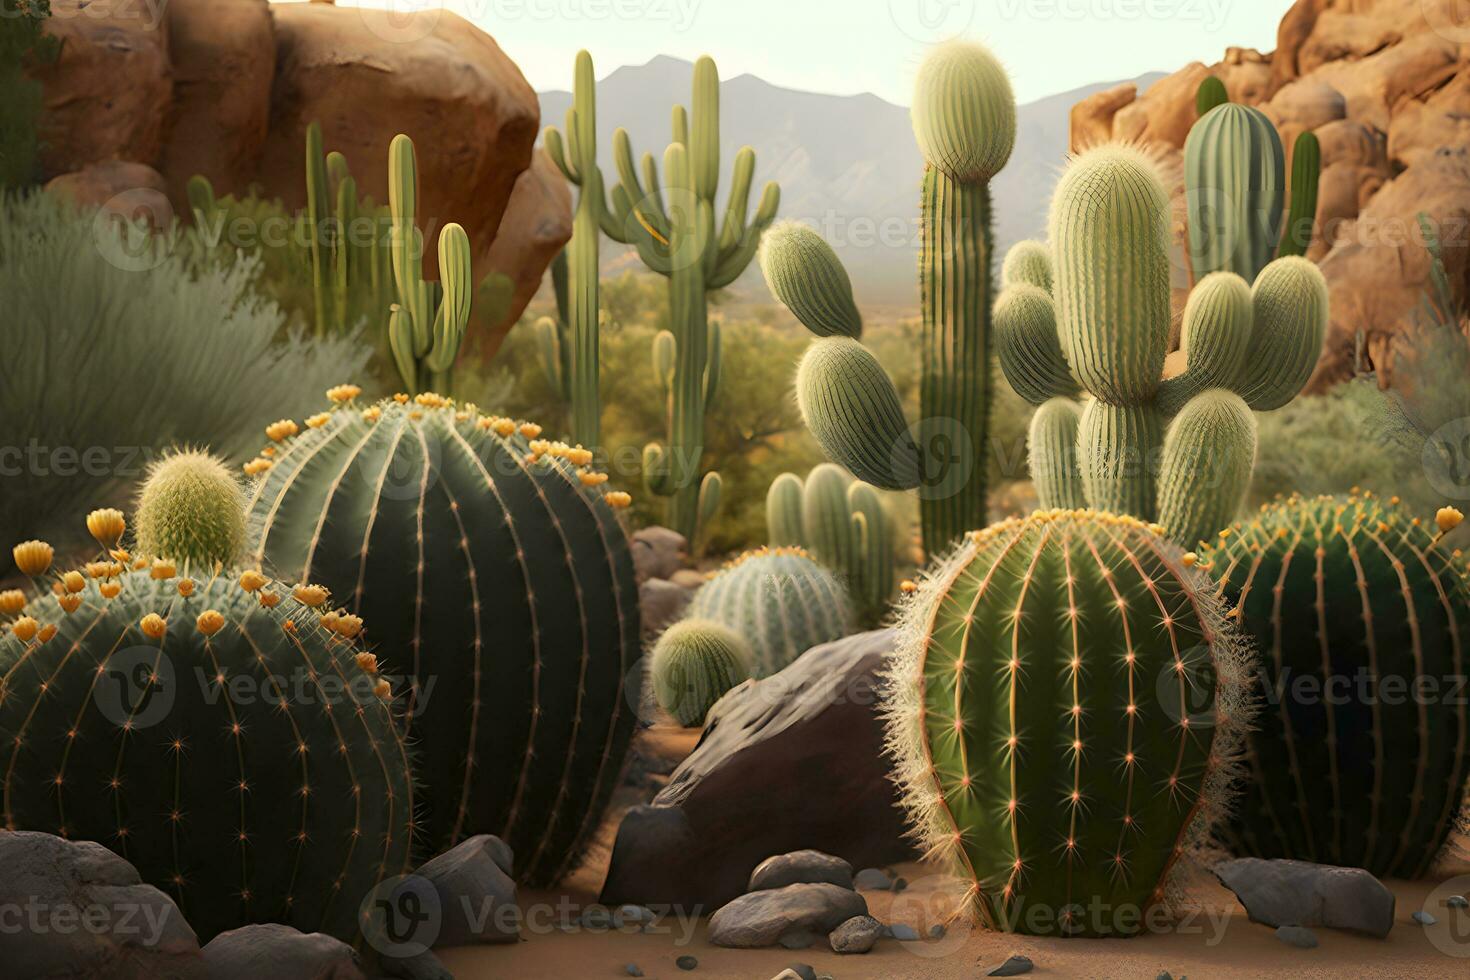 Desert Cacti Cactus blossom and Saguaros. Neural network AI generated photo